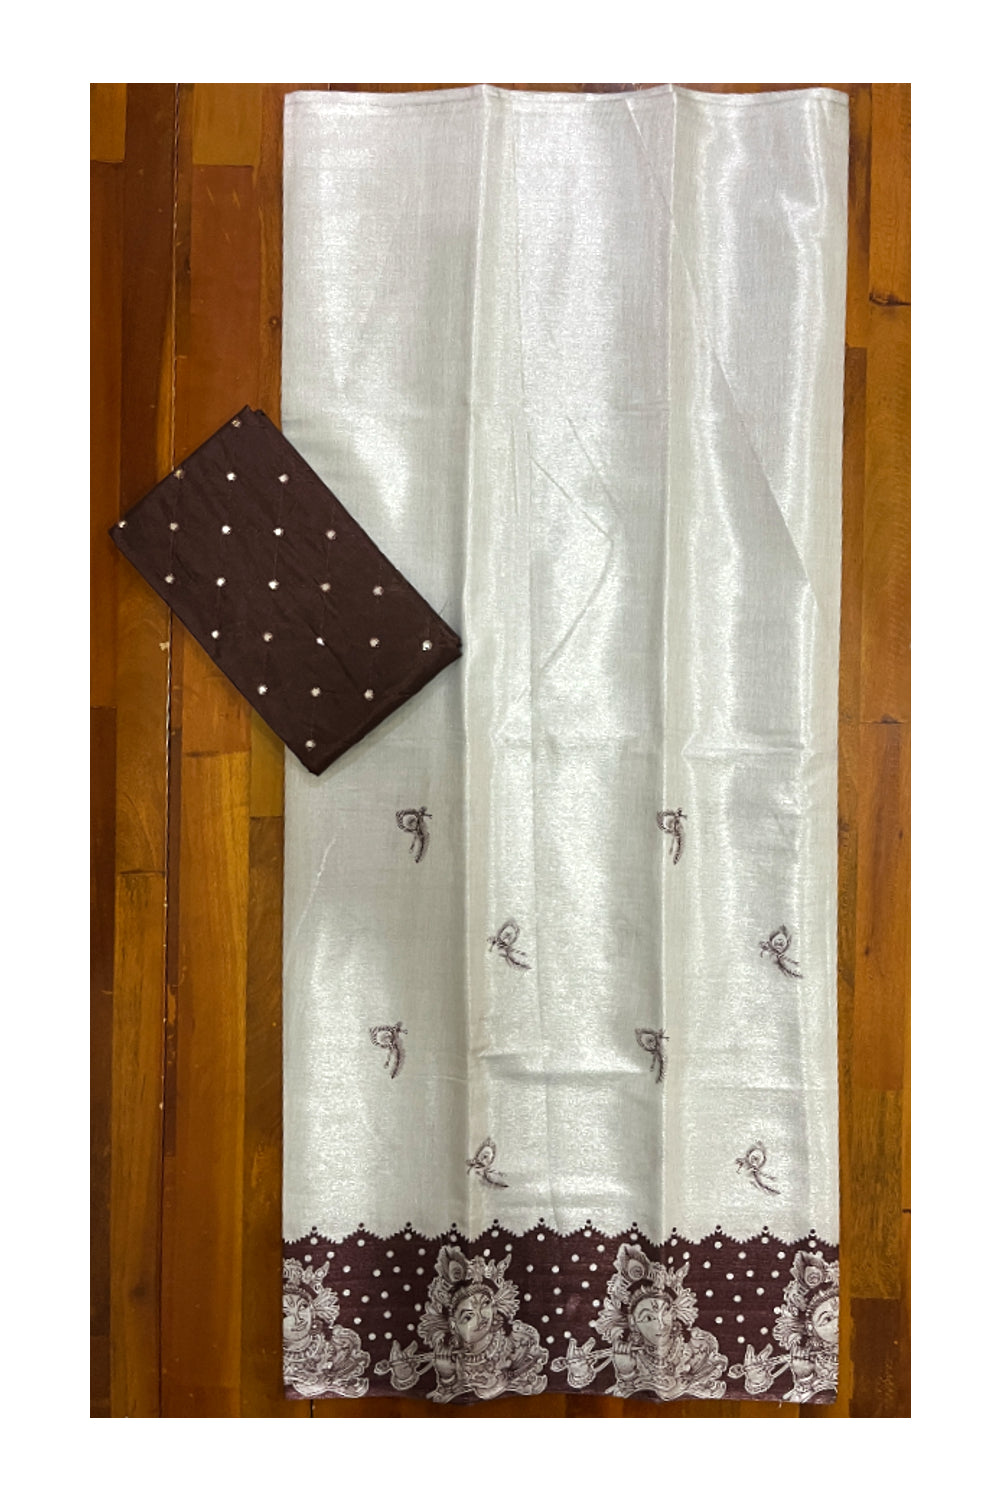 Kerala Silver Tissue Block Printed Pavada and Brown Designer Blouse Material for Kids/Girls 4.3 Meters